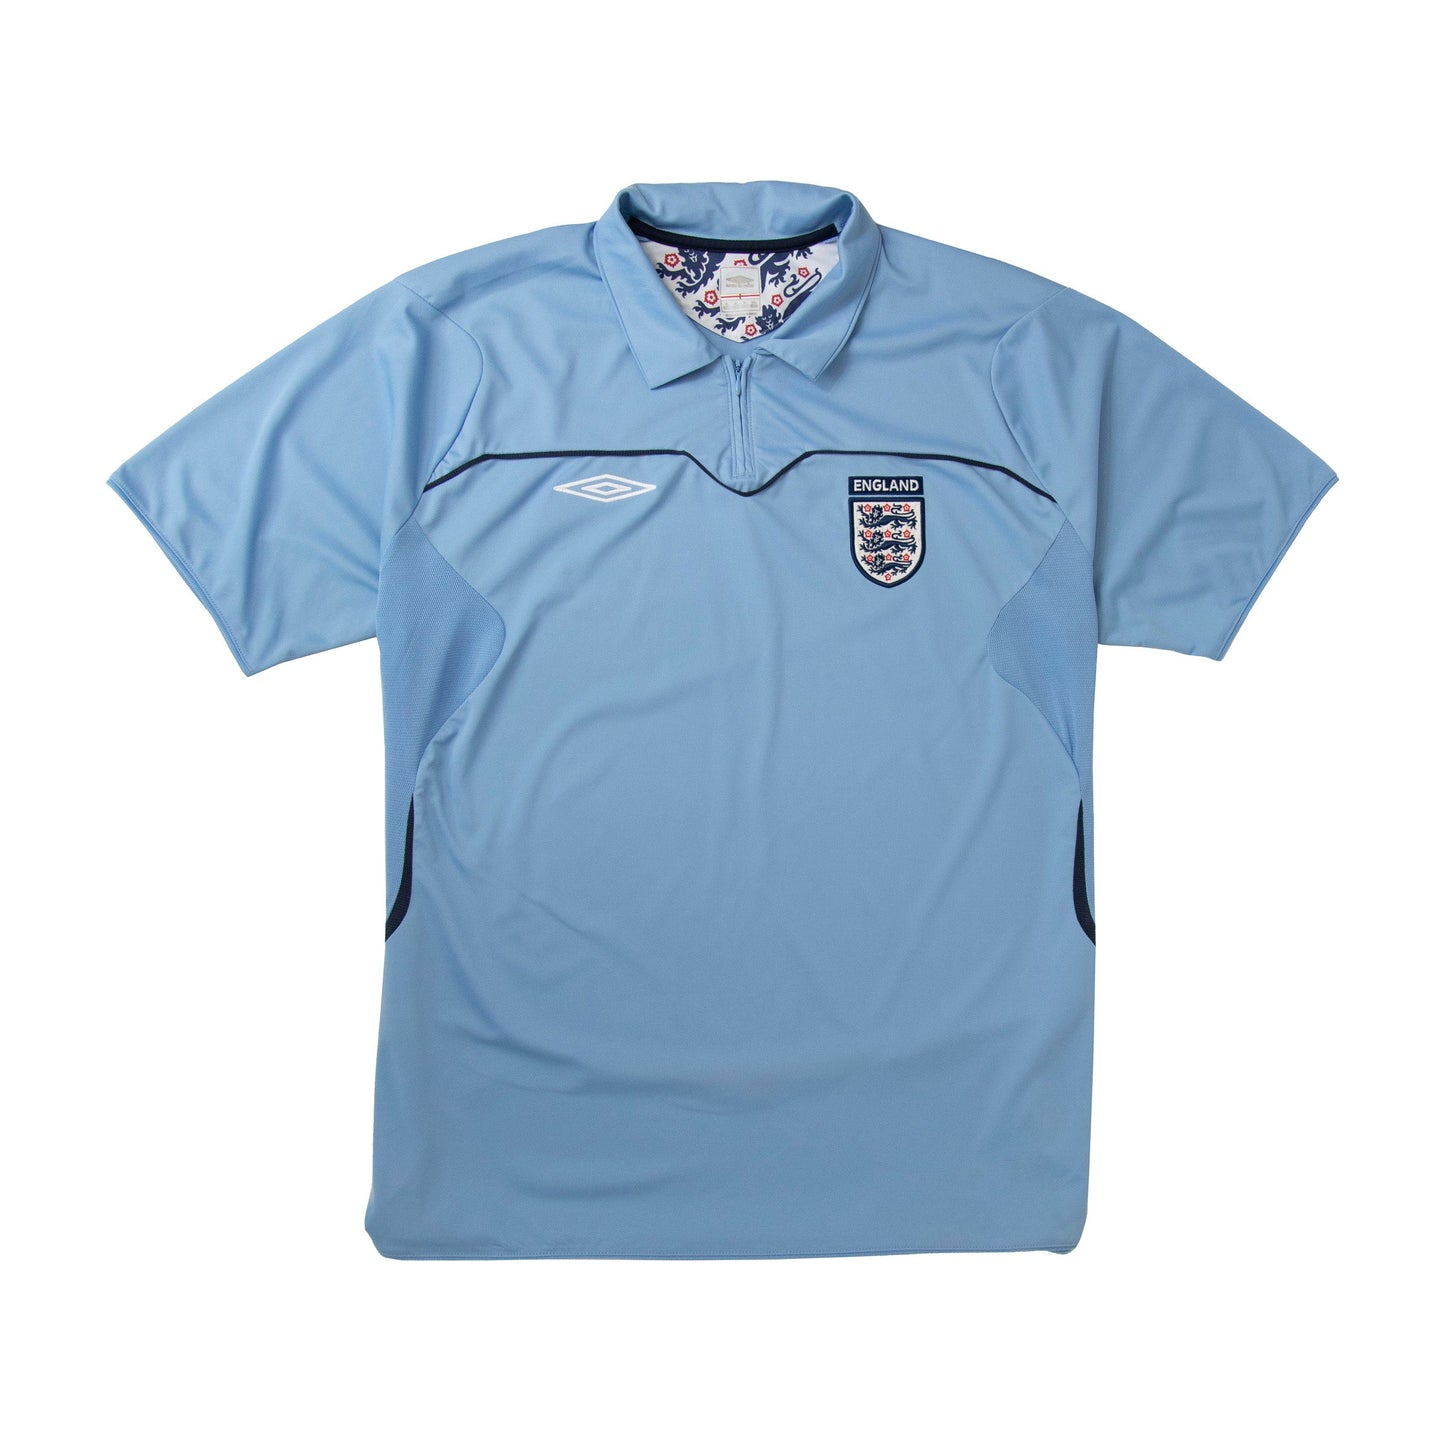 2007/08 England x Umbro Football Shirt